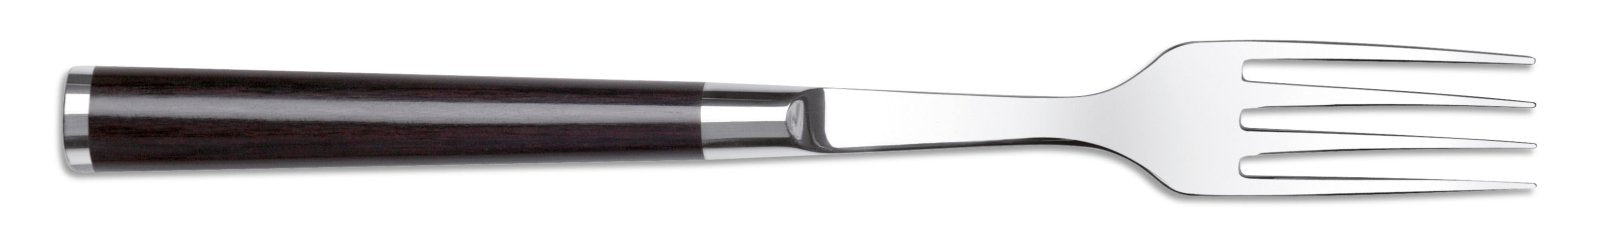 KAI Shun 2 Piece Fork Set - KAI-DM-0990 - The Cotswold Knife Company